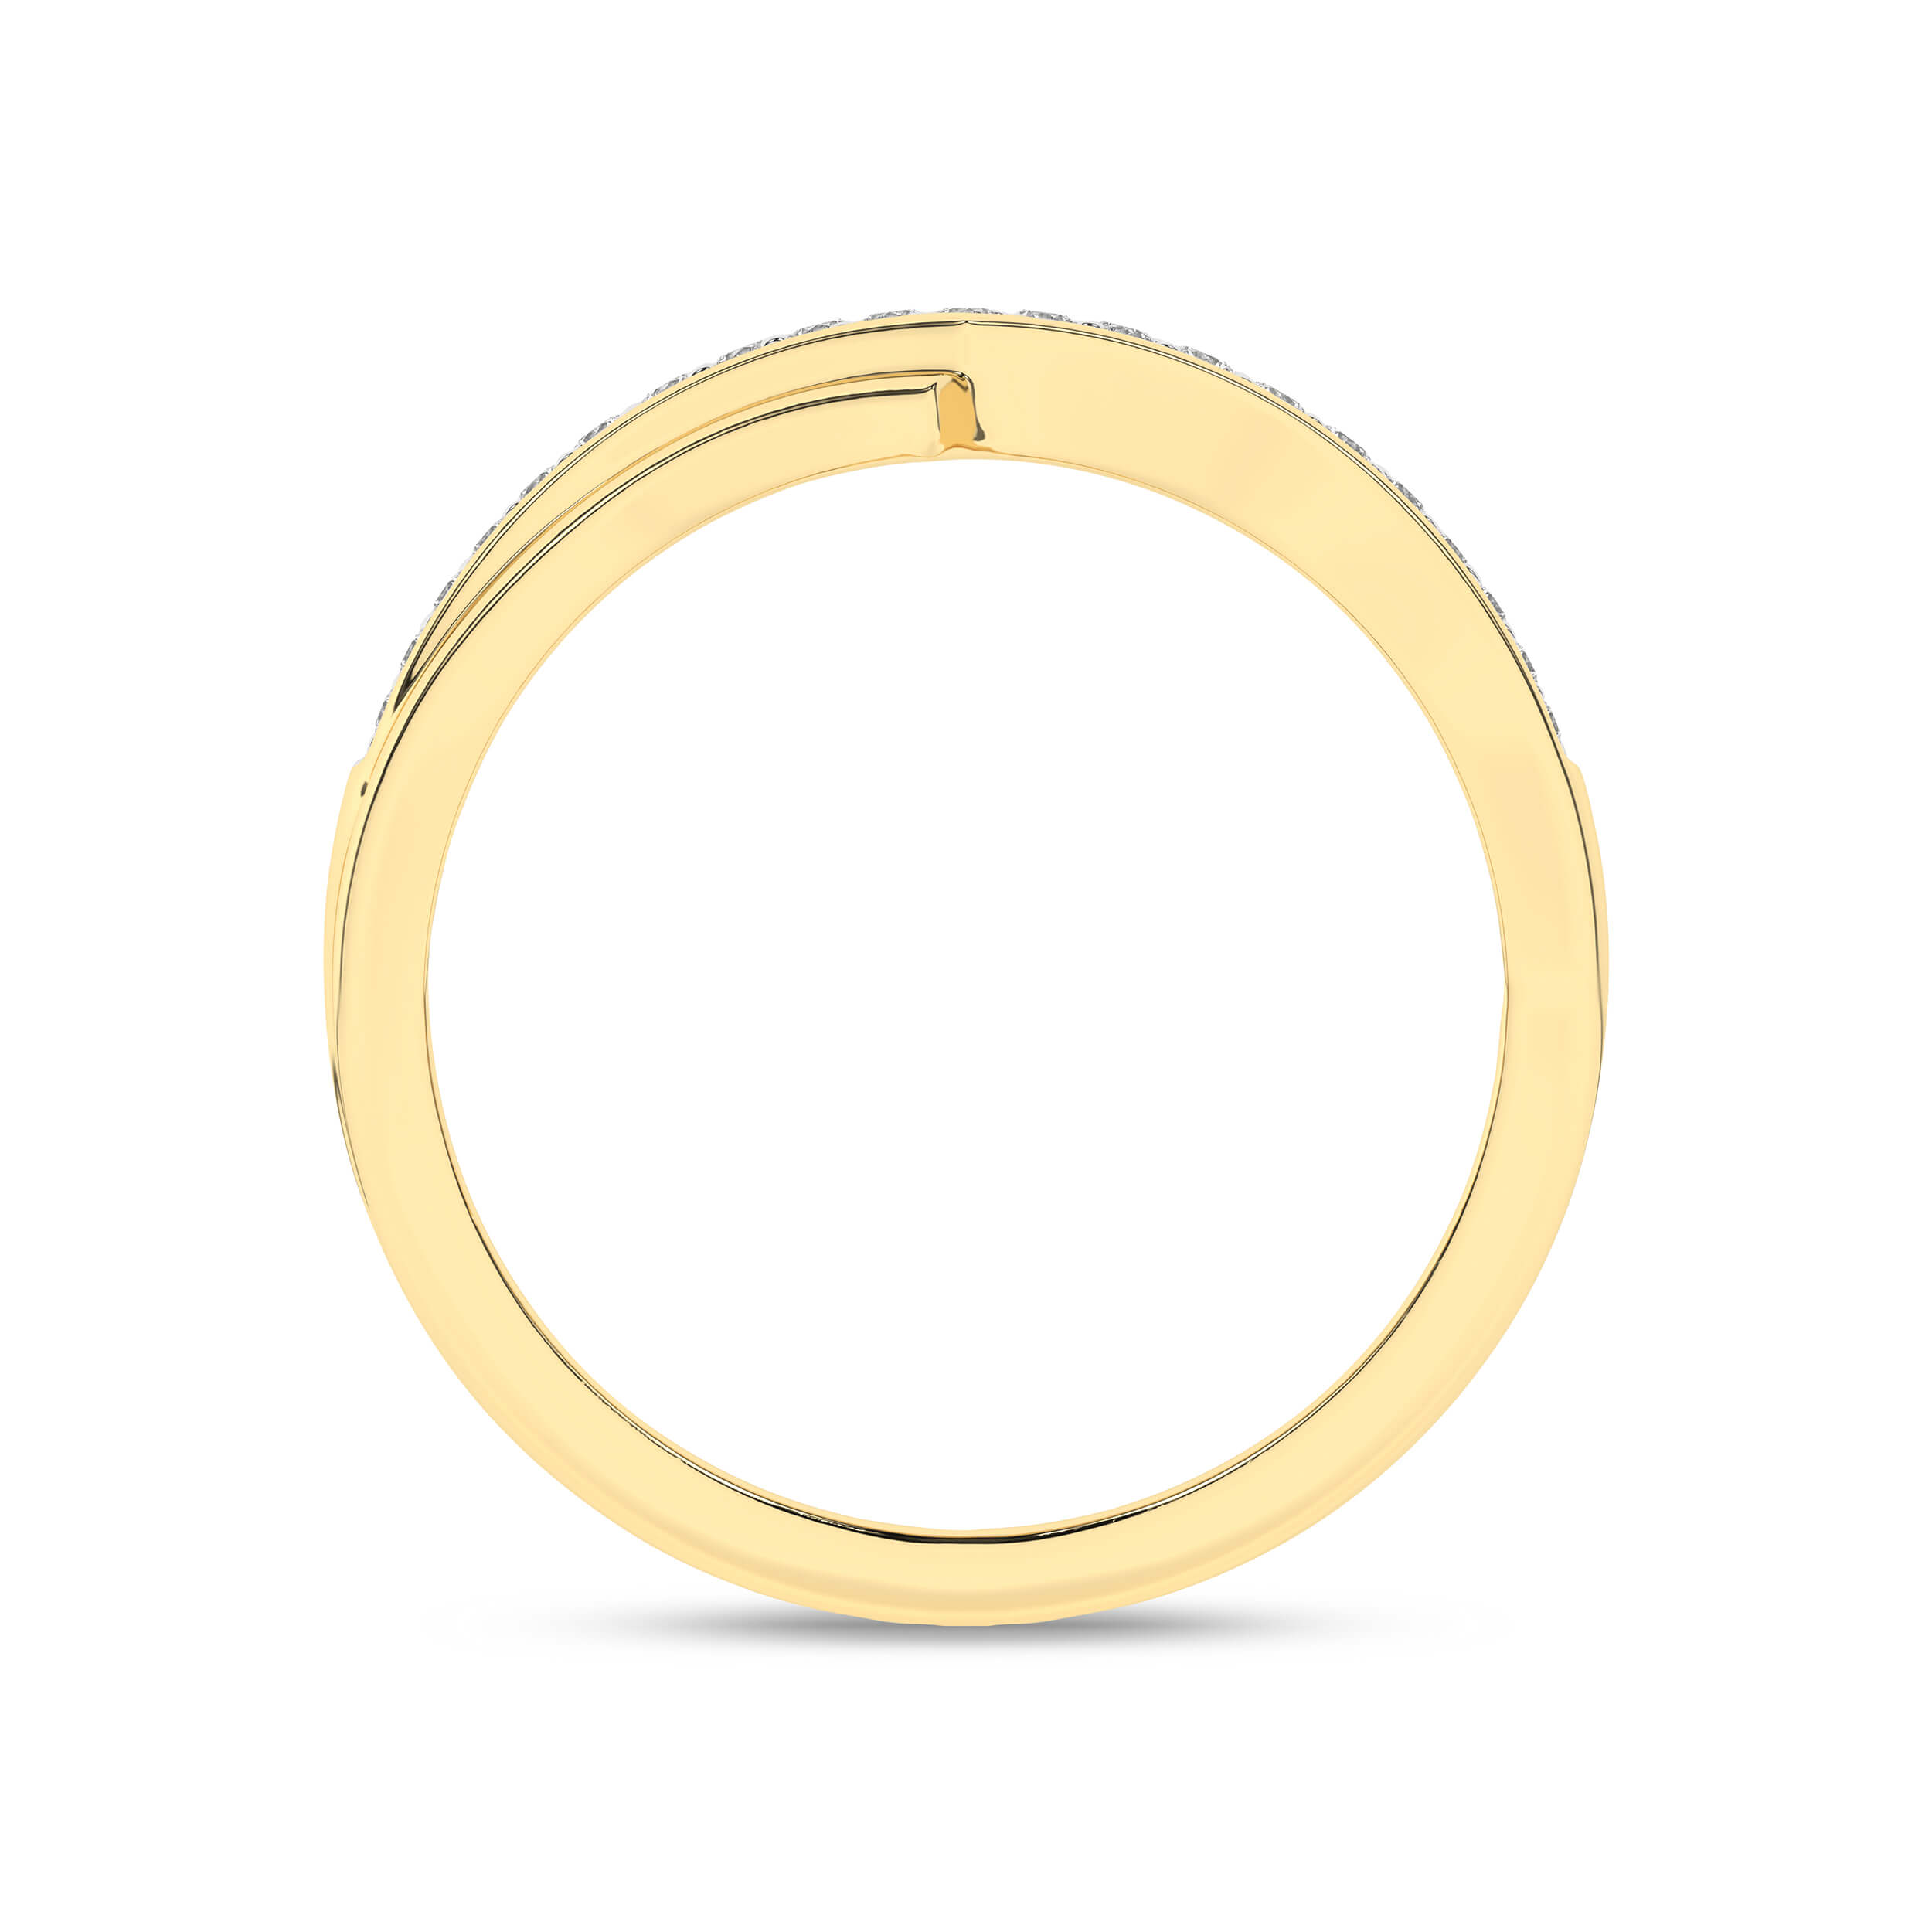 Inel din Aur Galben 14K cu Diamante 0.10Ct, articol RA8880, previzualizare foto 1